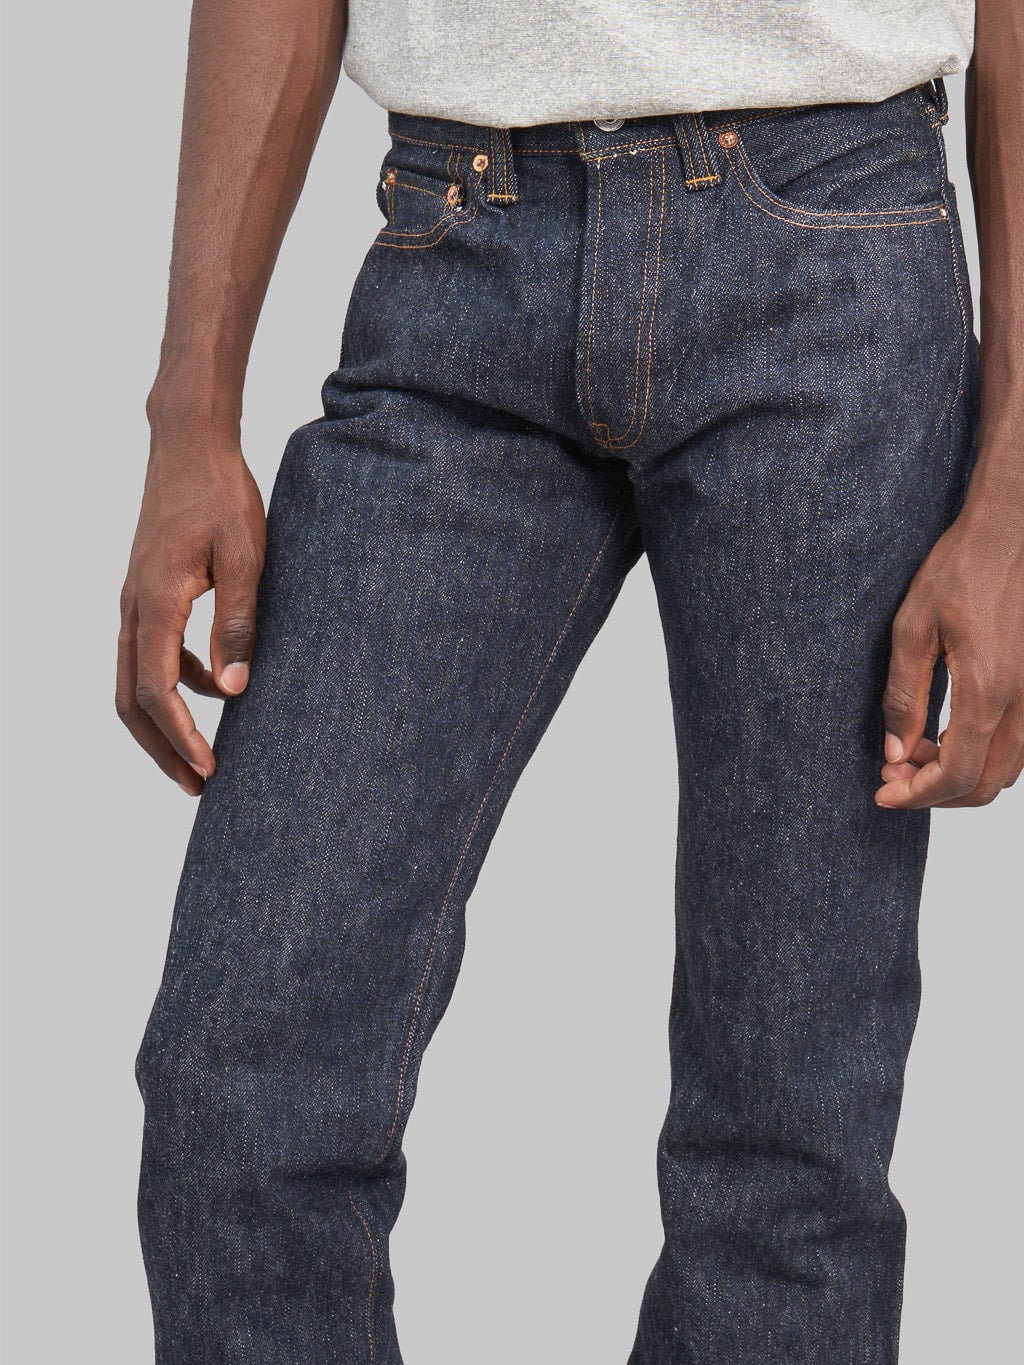 samurai jeans S710XX 19oz slim straight jeans inseam